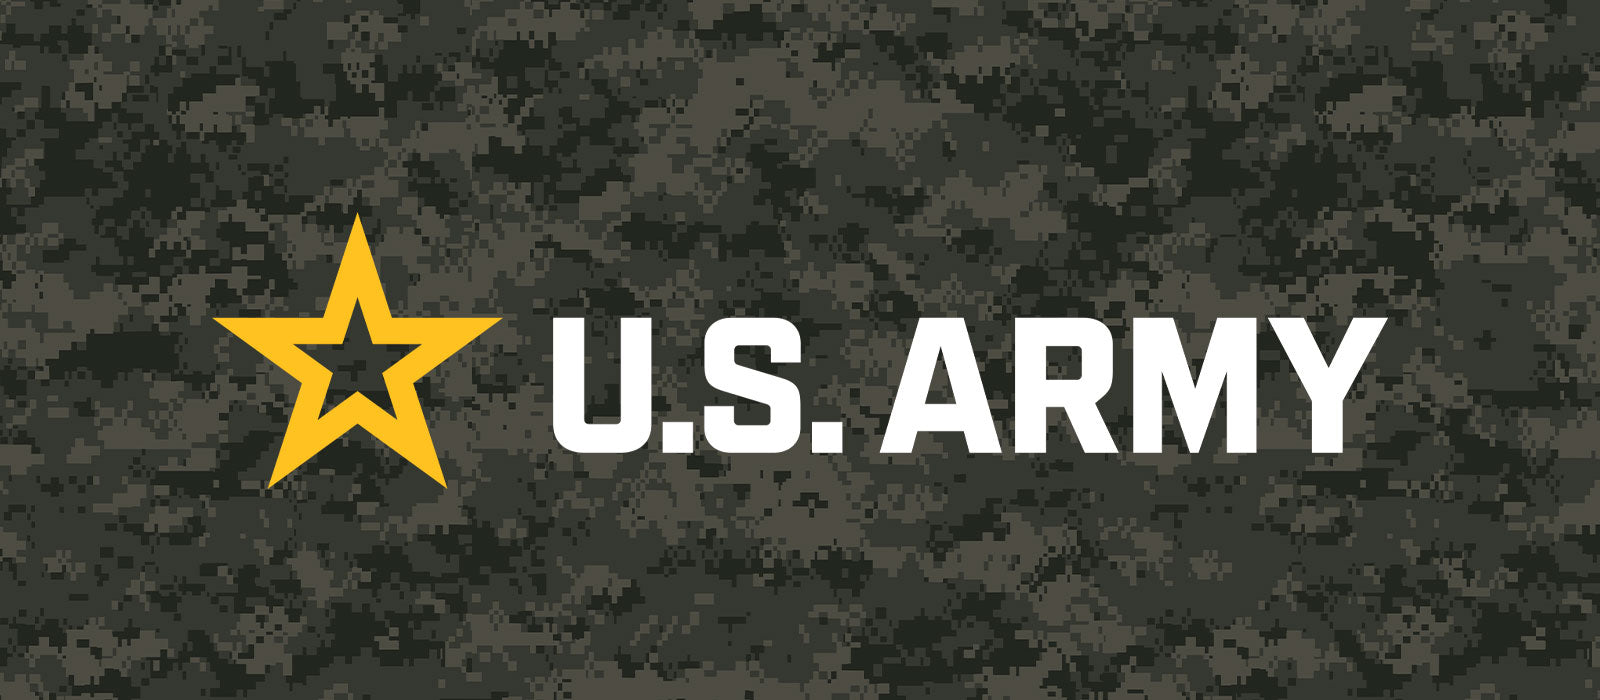 U.S Army - Affinity Bands